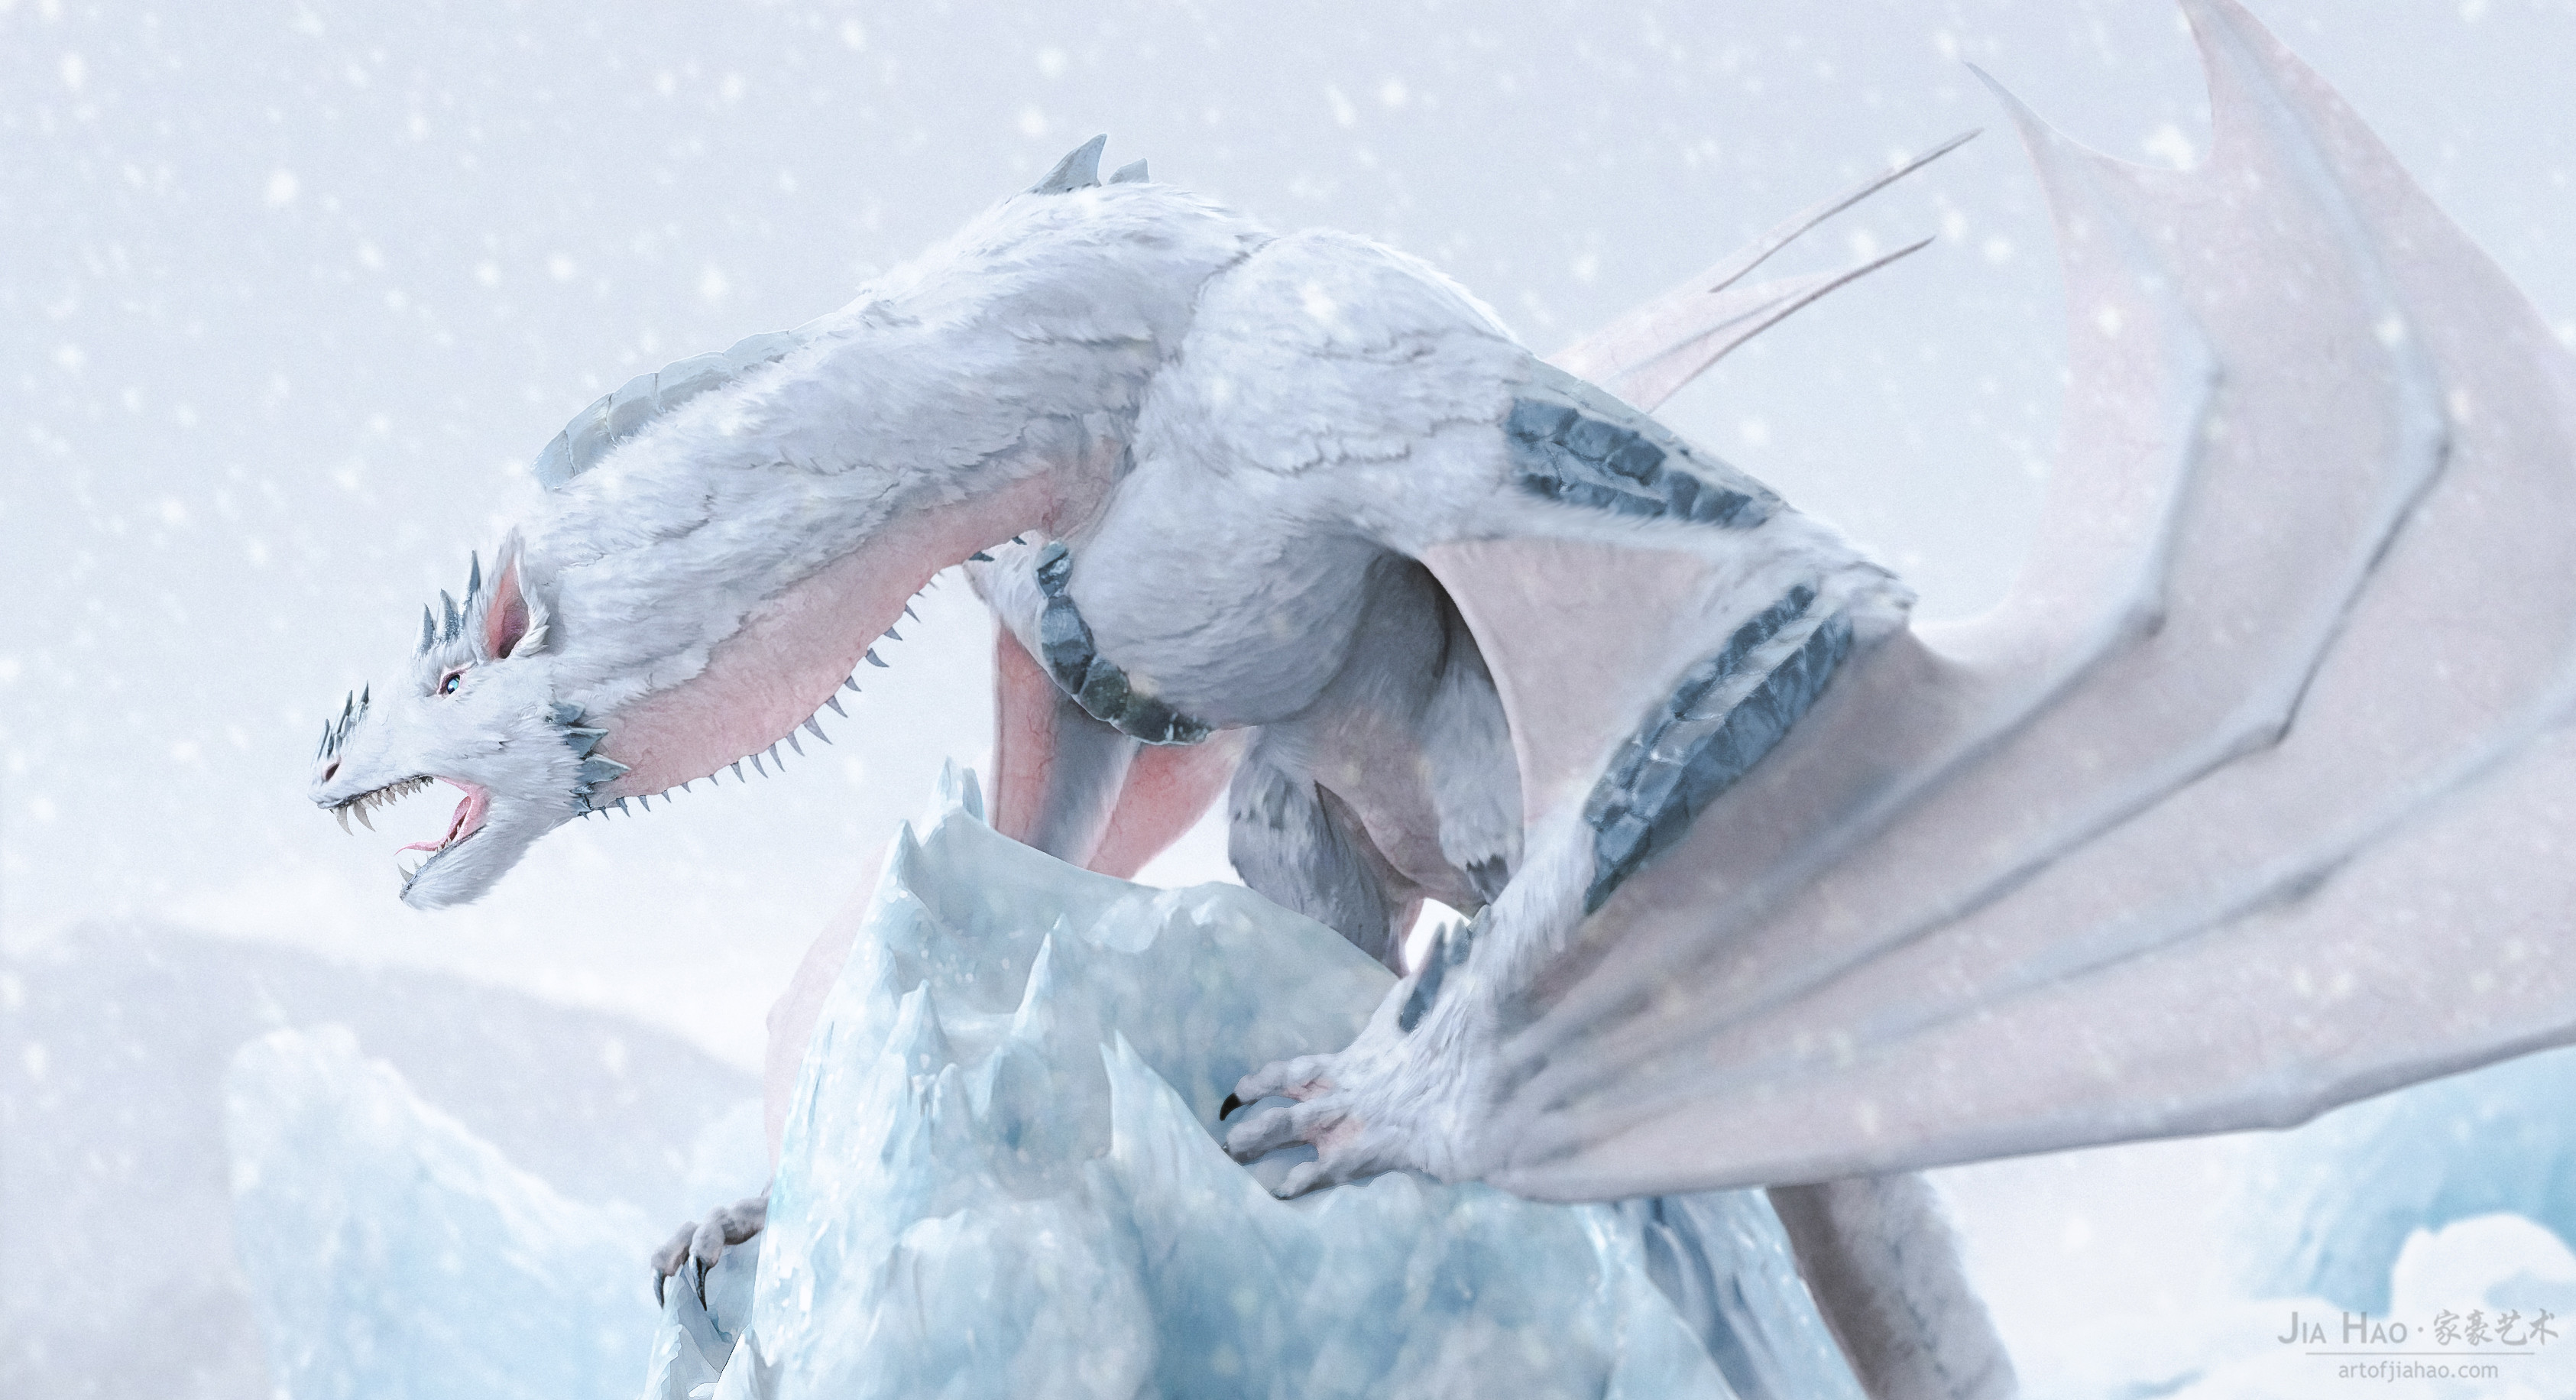 Голова дракона на снегу. Сноу драгон. Дракон ледяной (Draco occidentalis maritimus). Морская виверна-Левиафан. Драконы Jia hao.